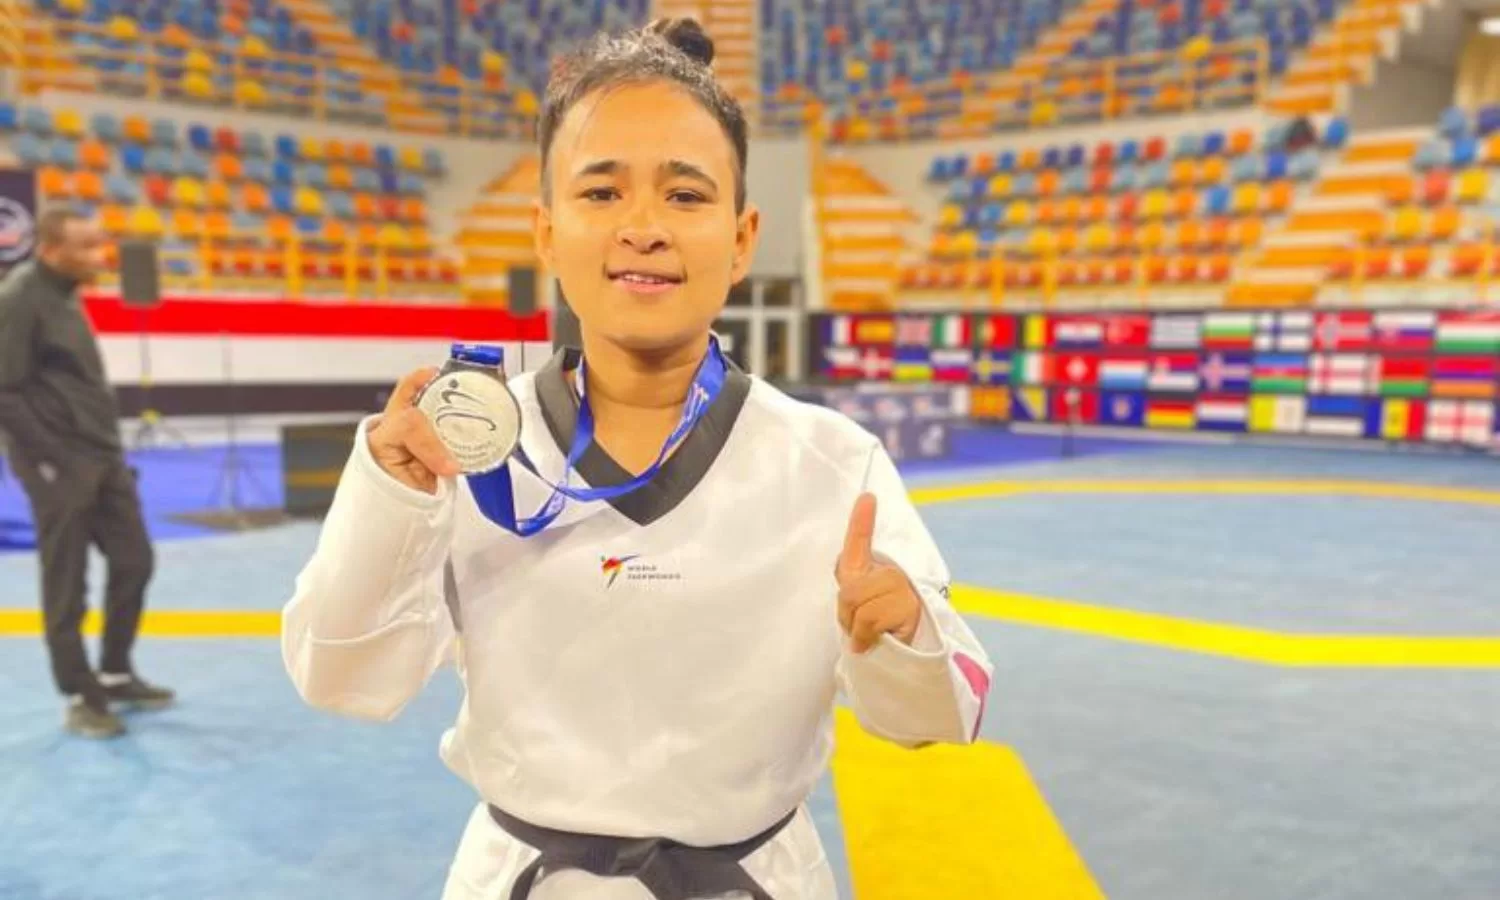 Taekwondo player Aruna Tanwar qualifies for Paris Paralympics